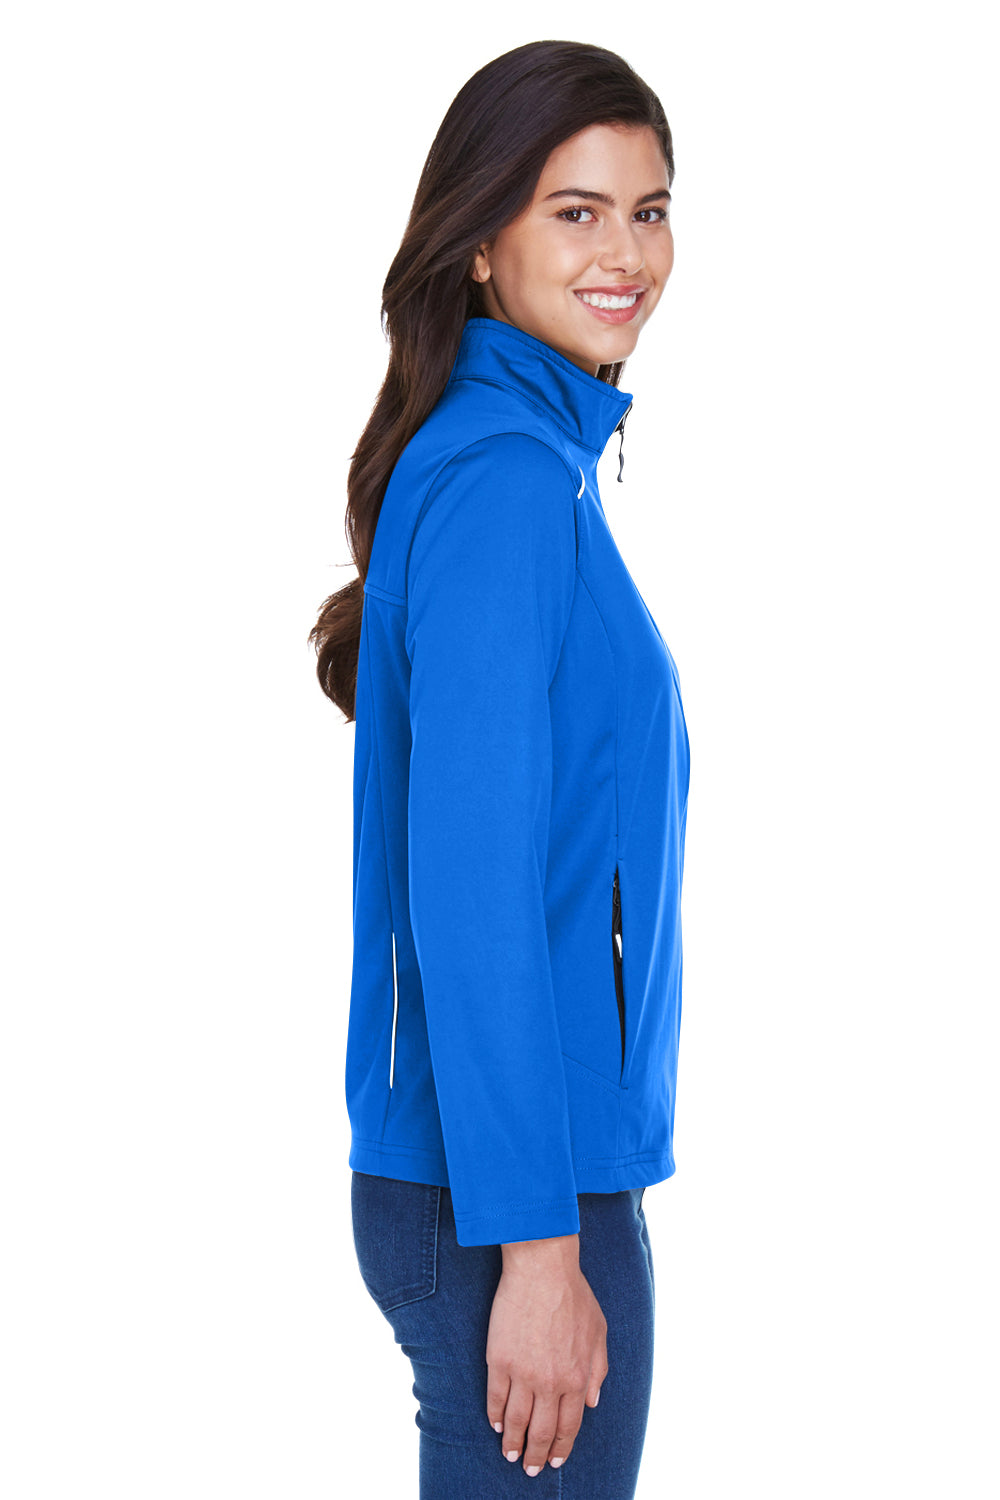 Core 365 CE708W Womens Techno Lite Water Resistant Full Zip Jacket Royal Blue Side